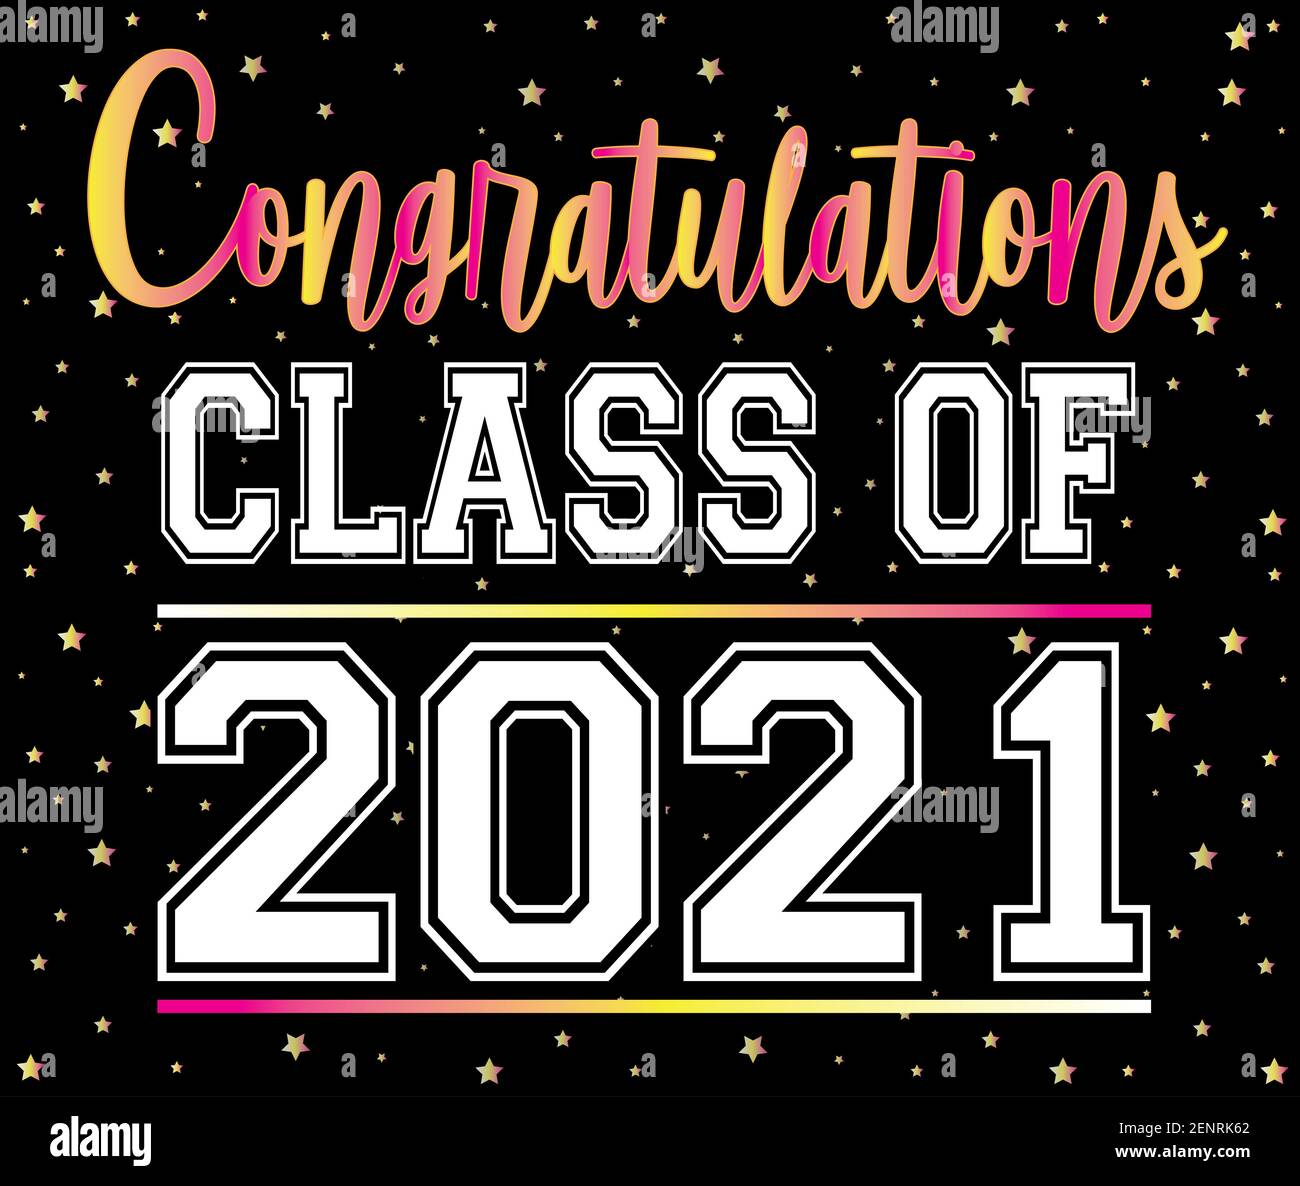 Senior Class of 2021 Stock Photo